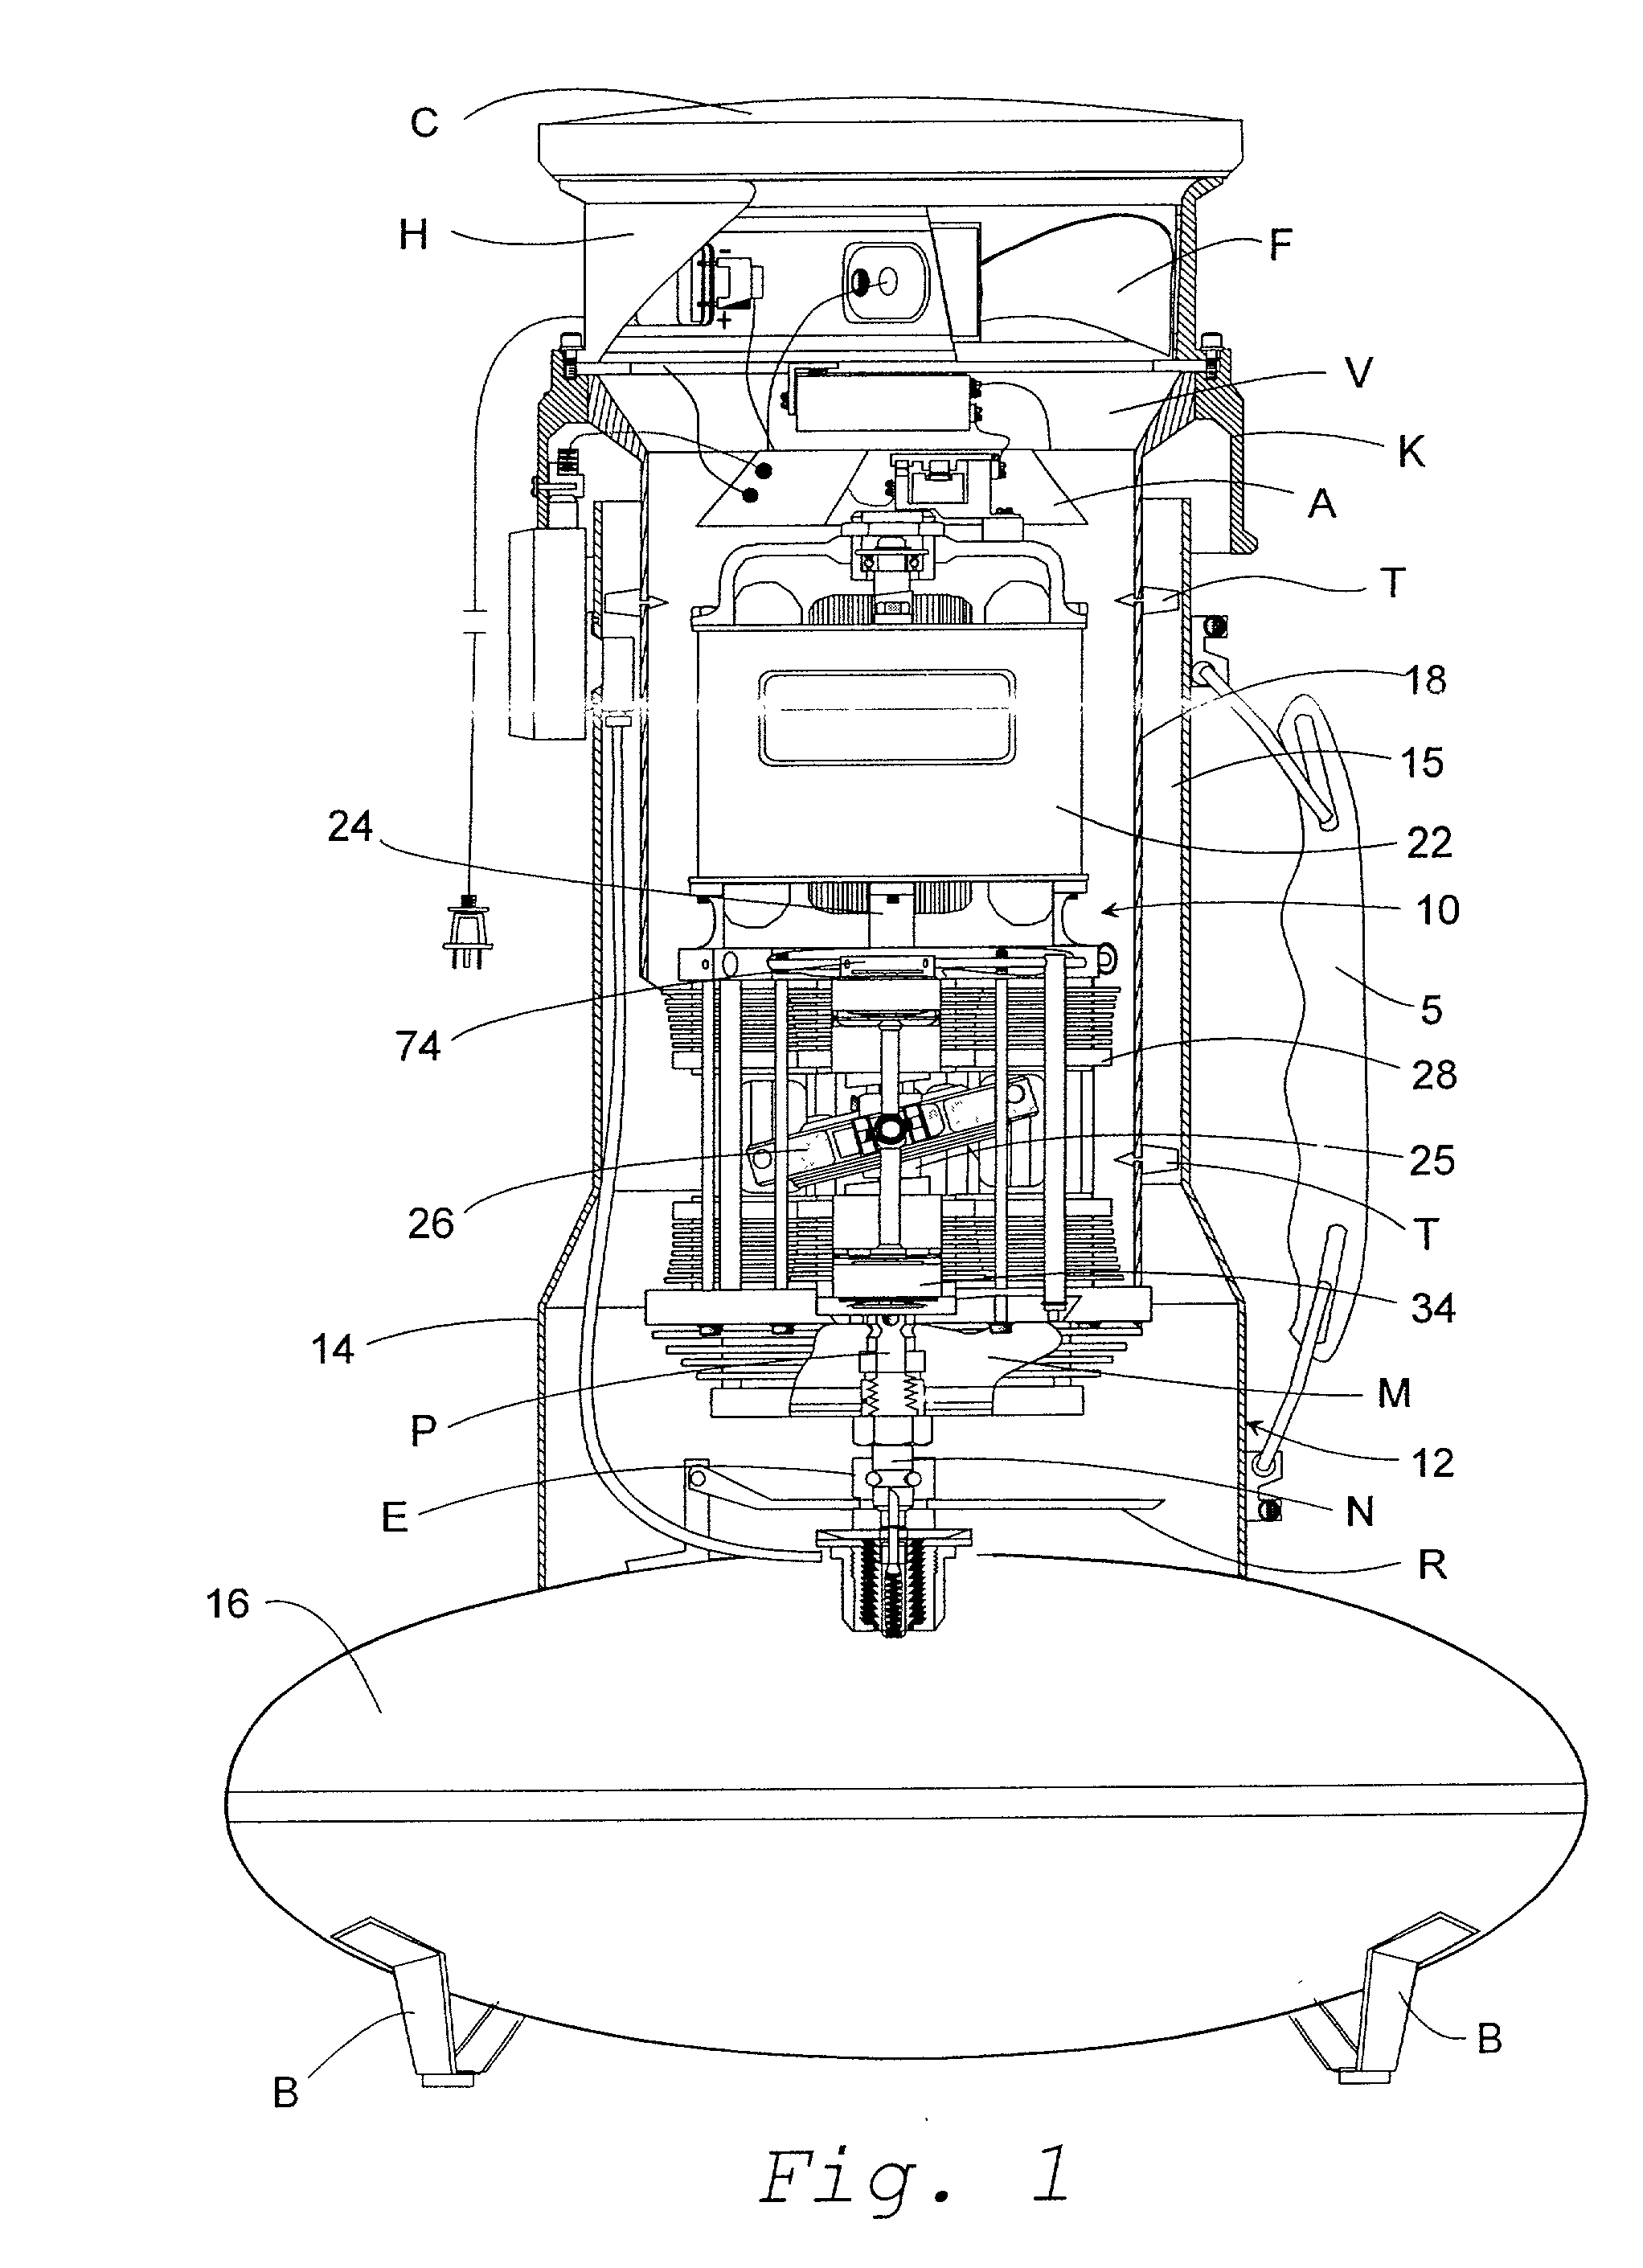 Shuttle piston assembly with dynamic valve